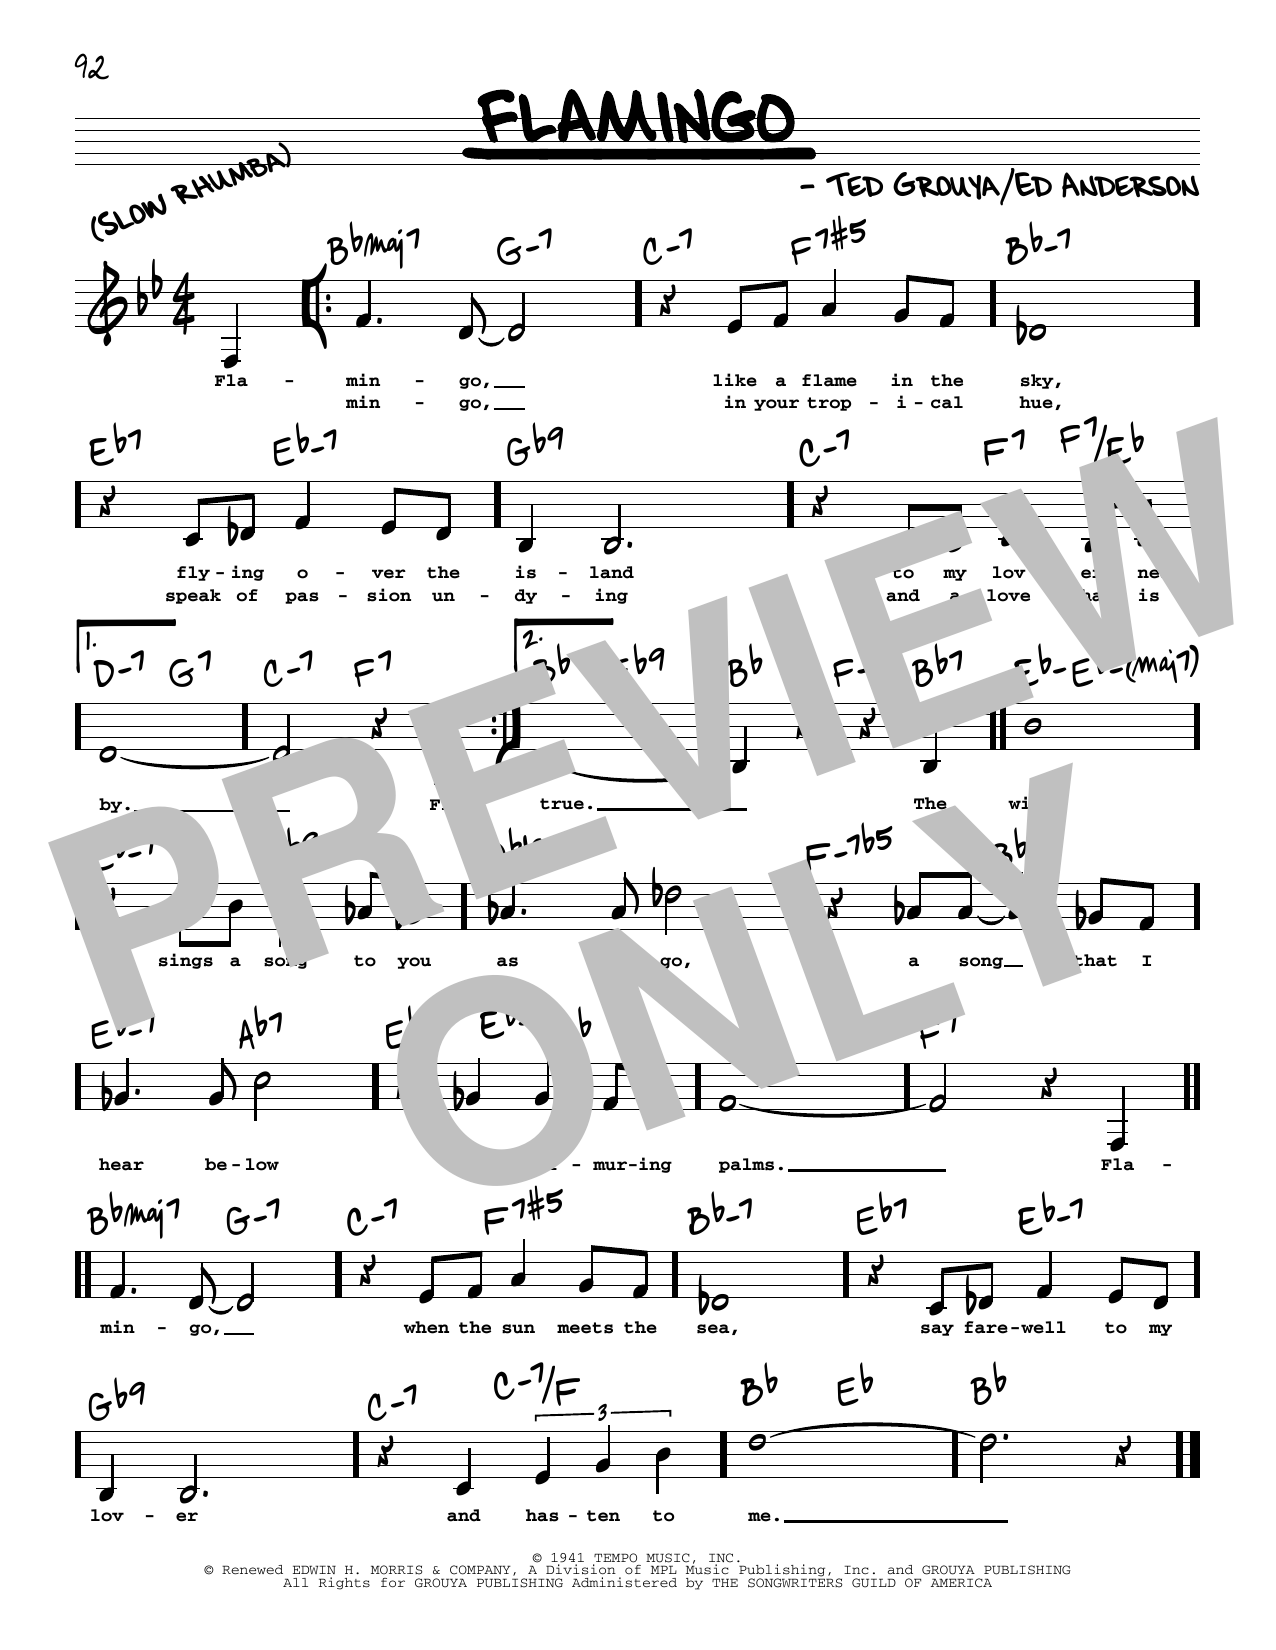 Ed Anderson Flamingo (Low Voice) sheet music notes printable PDF score